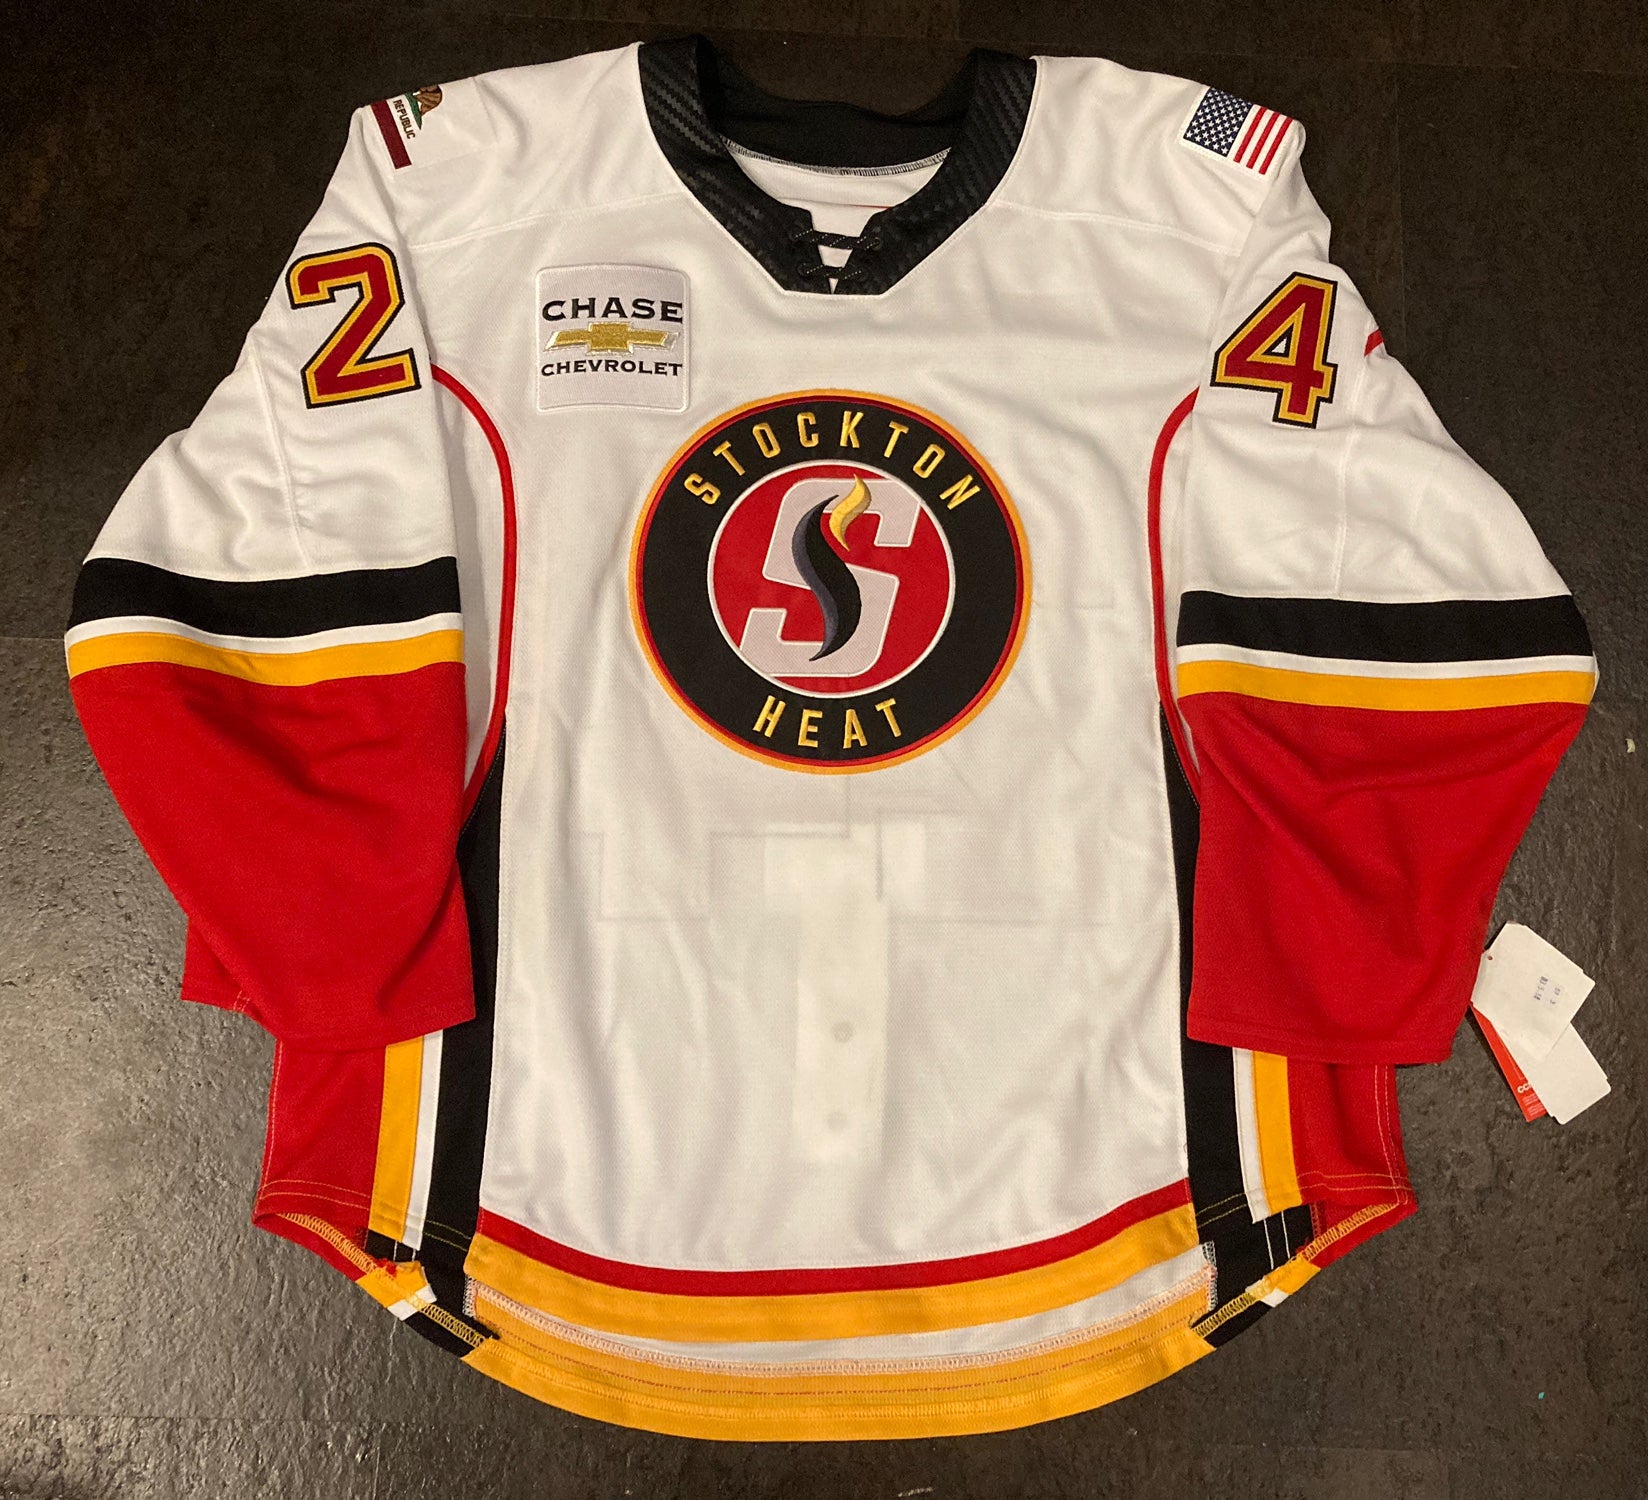 AHL - New CCM Hockey Socks - Stockton Heat (Red/White/Yellow)